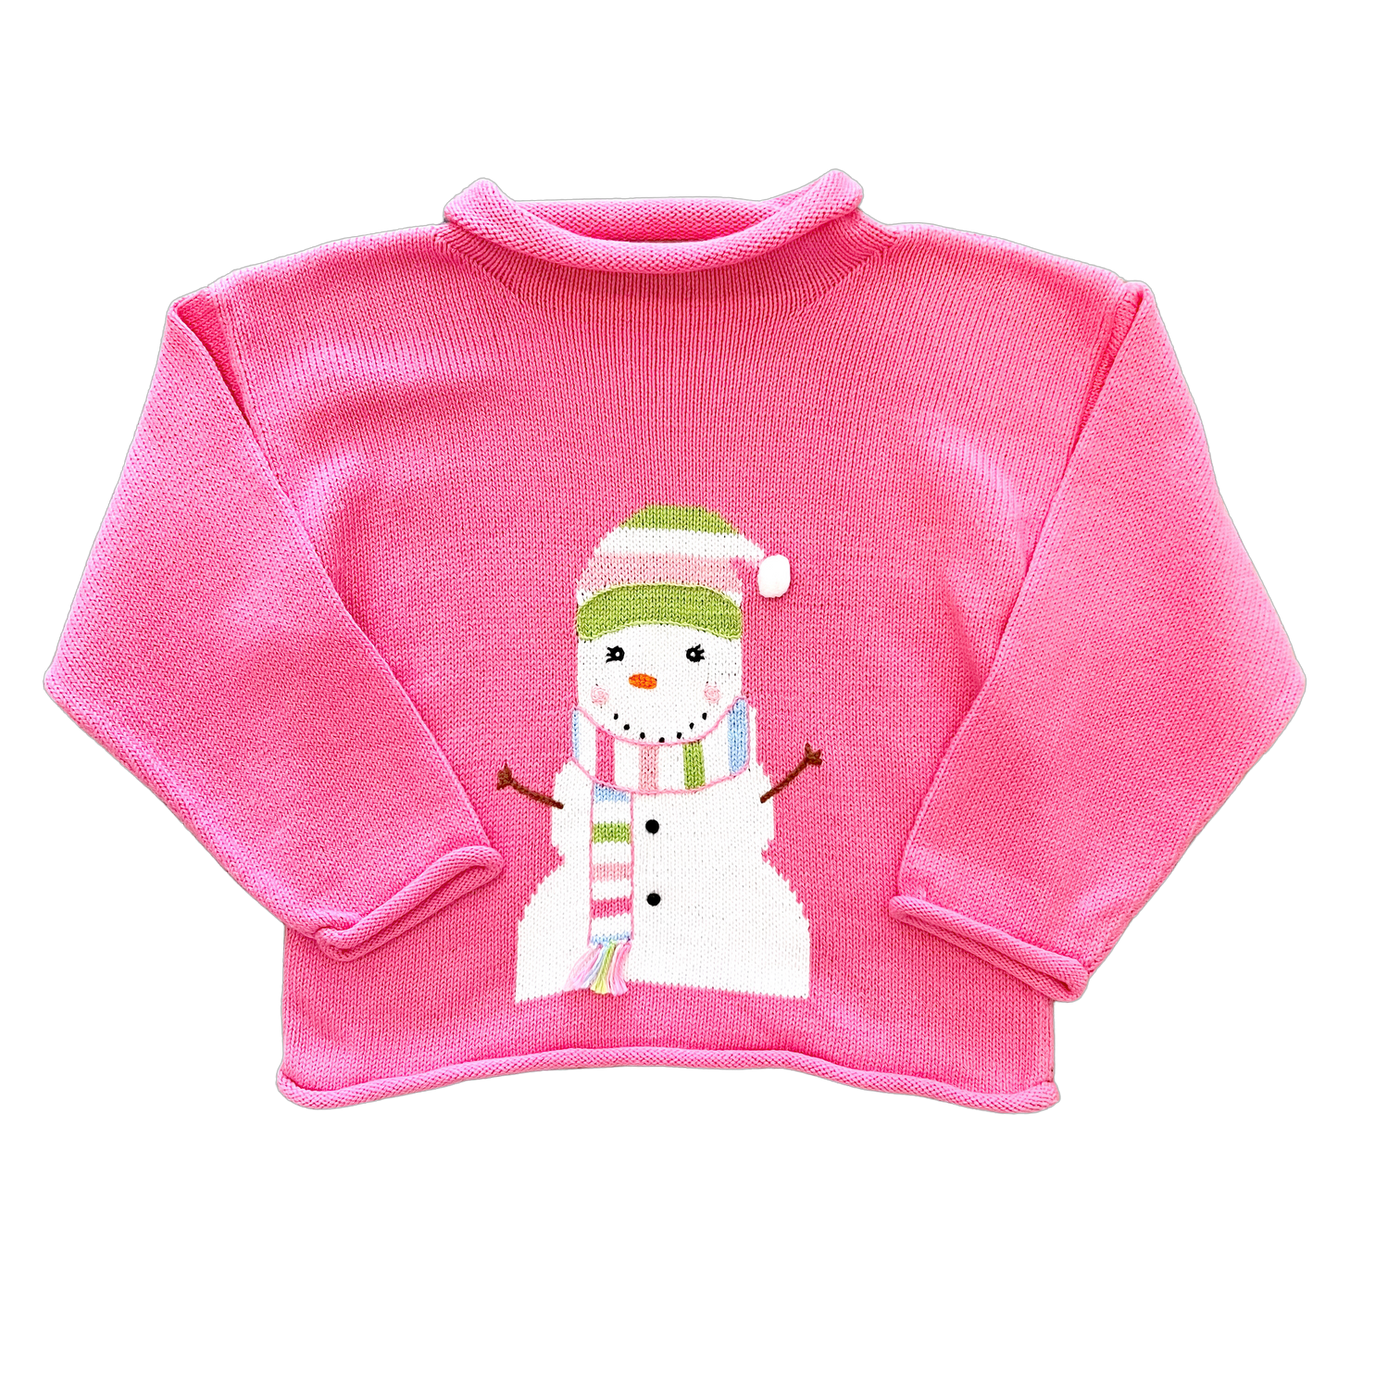 Snowman Rollneck Sweater